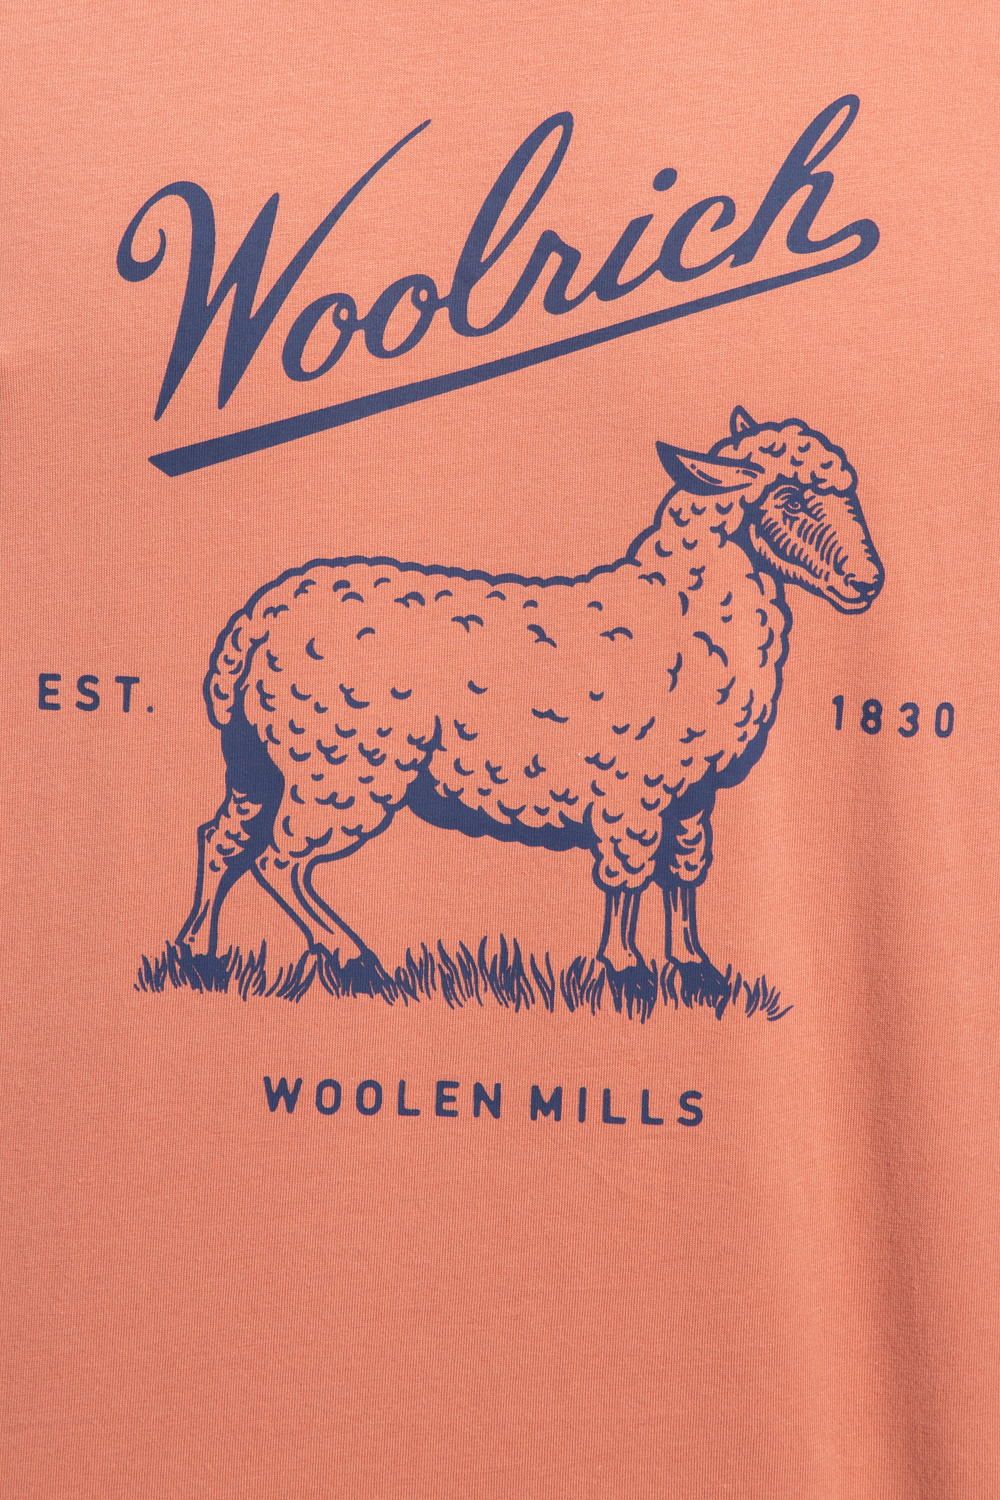 Woolrich Maison logo-print T-shirt Rip Bianco